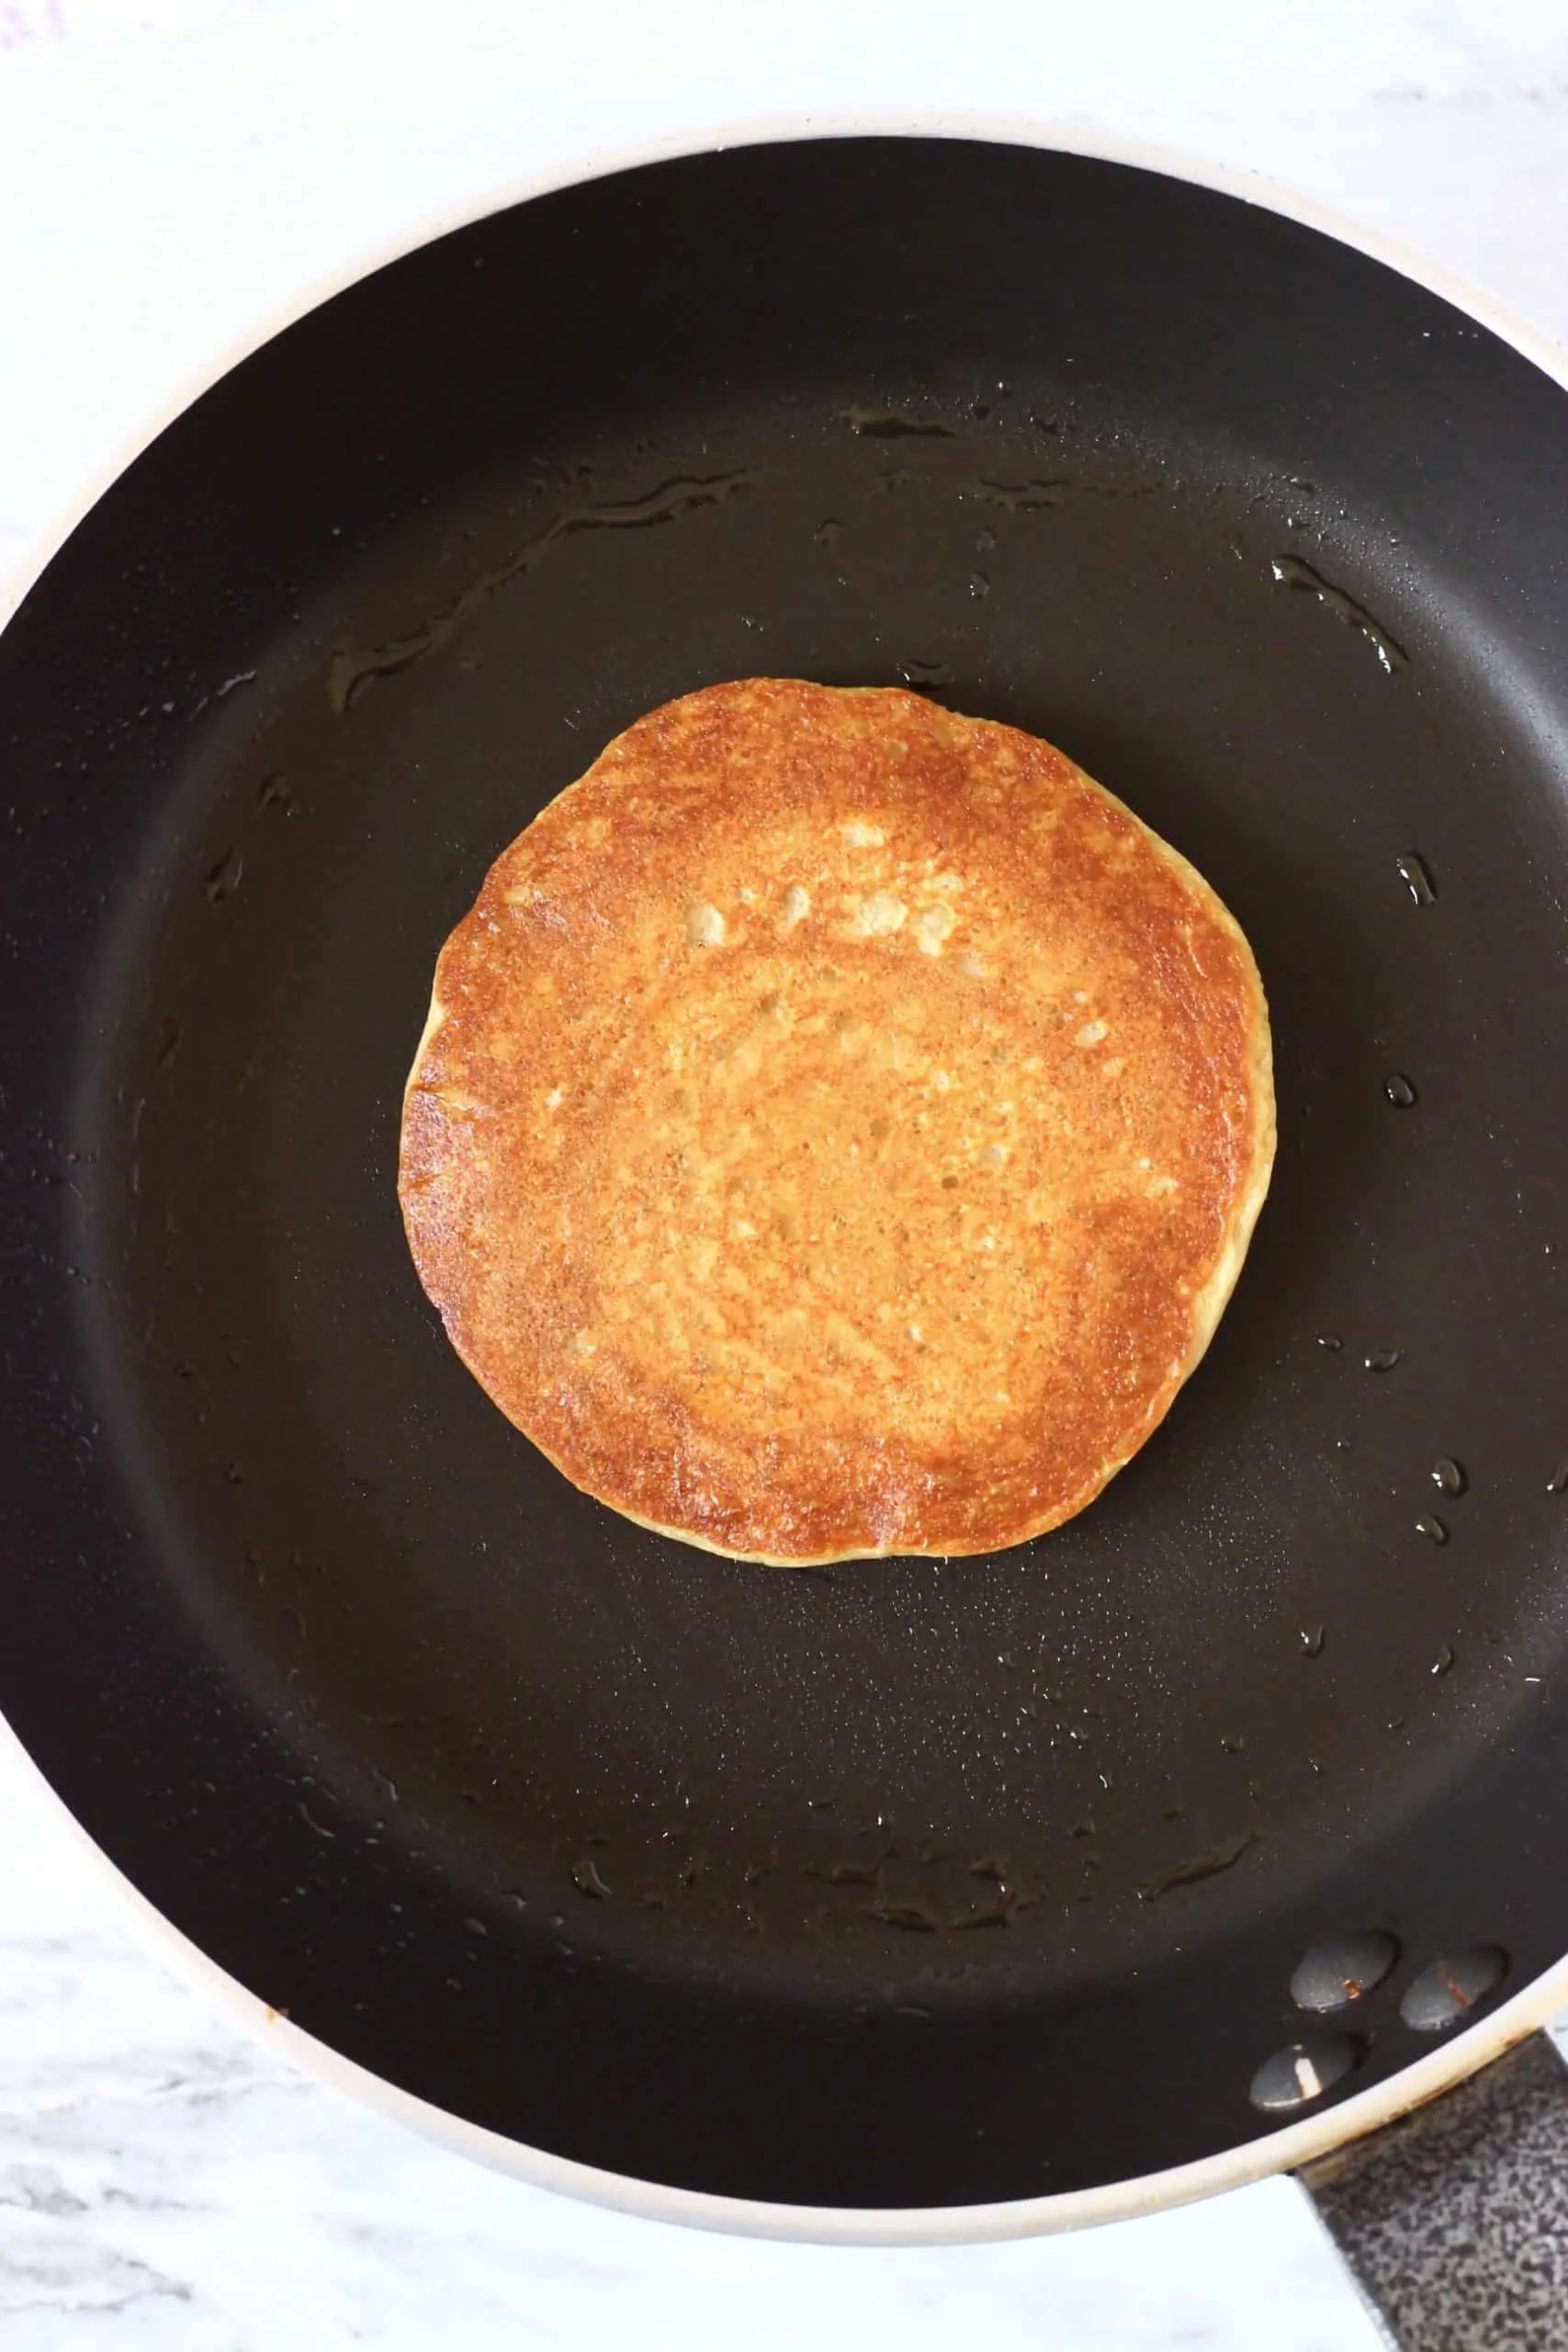 A golden brown gluten-free vegan protein pancake in a frying pan